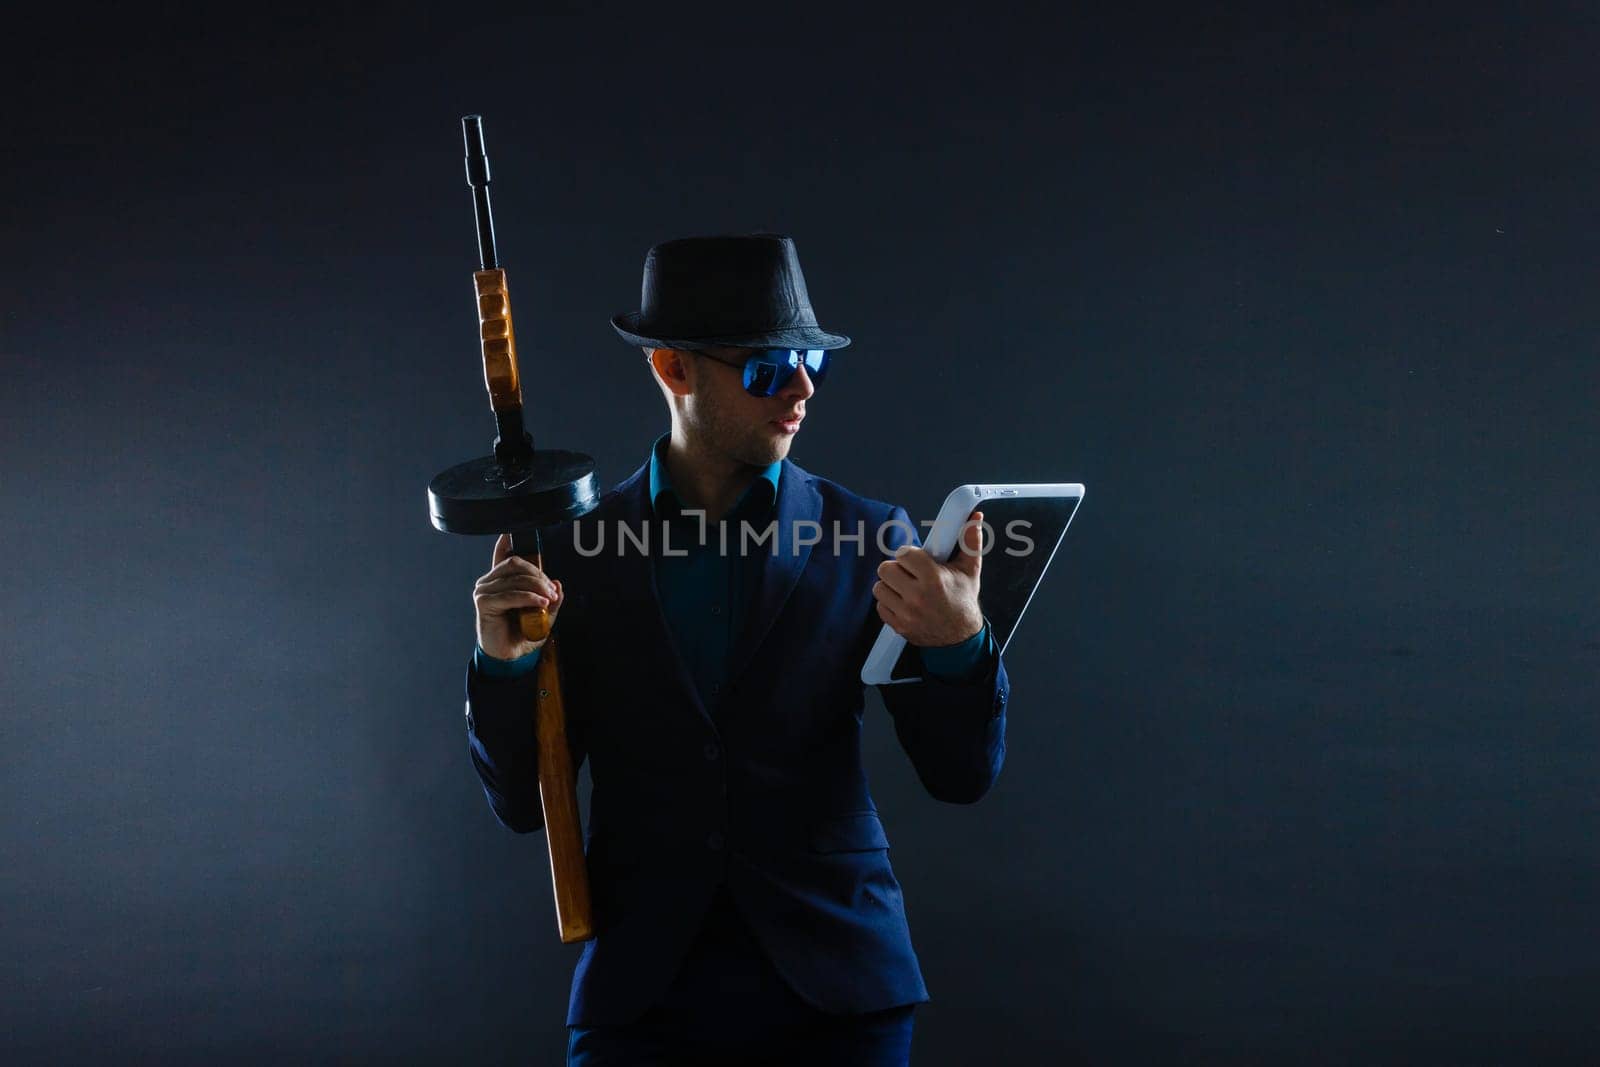 Mature Business Man Holding Gun on a dark background by Andelov13